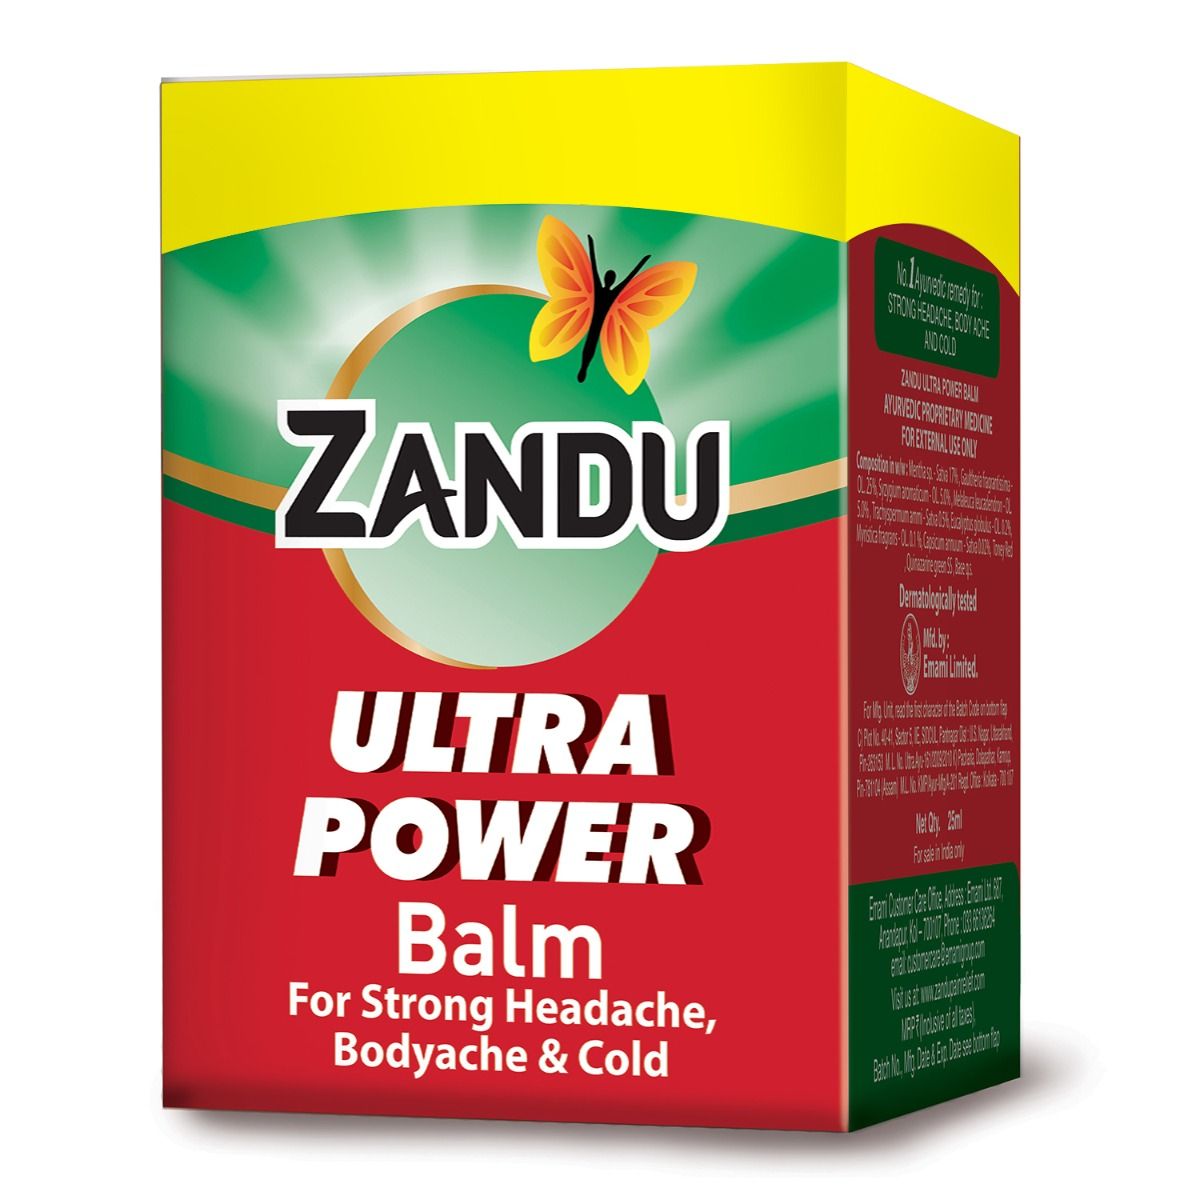 Zandu Ultra Power Balm, 25 ml, Pack of 1 